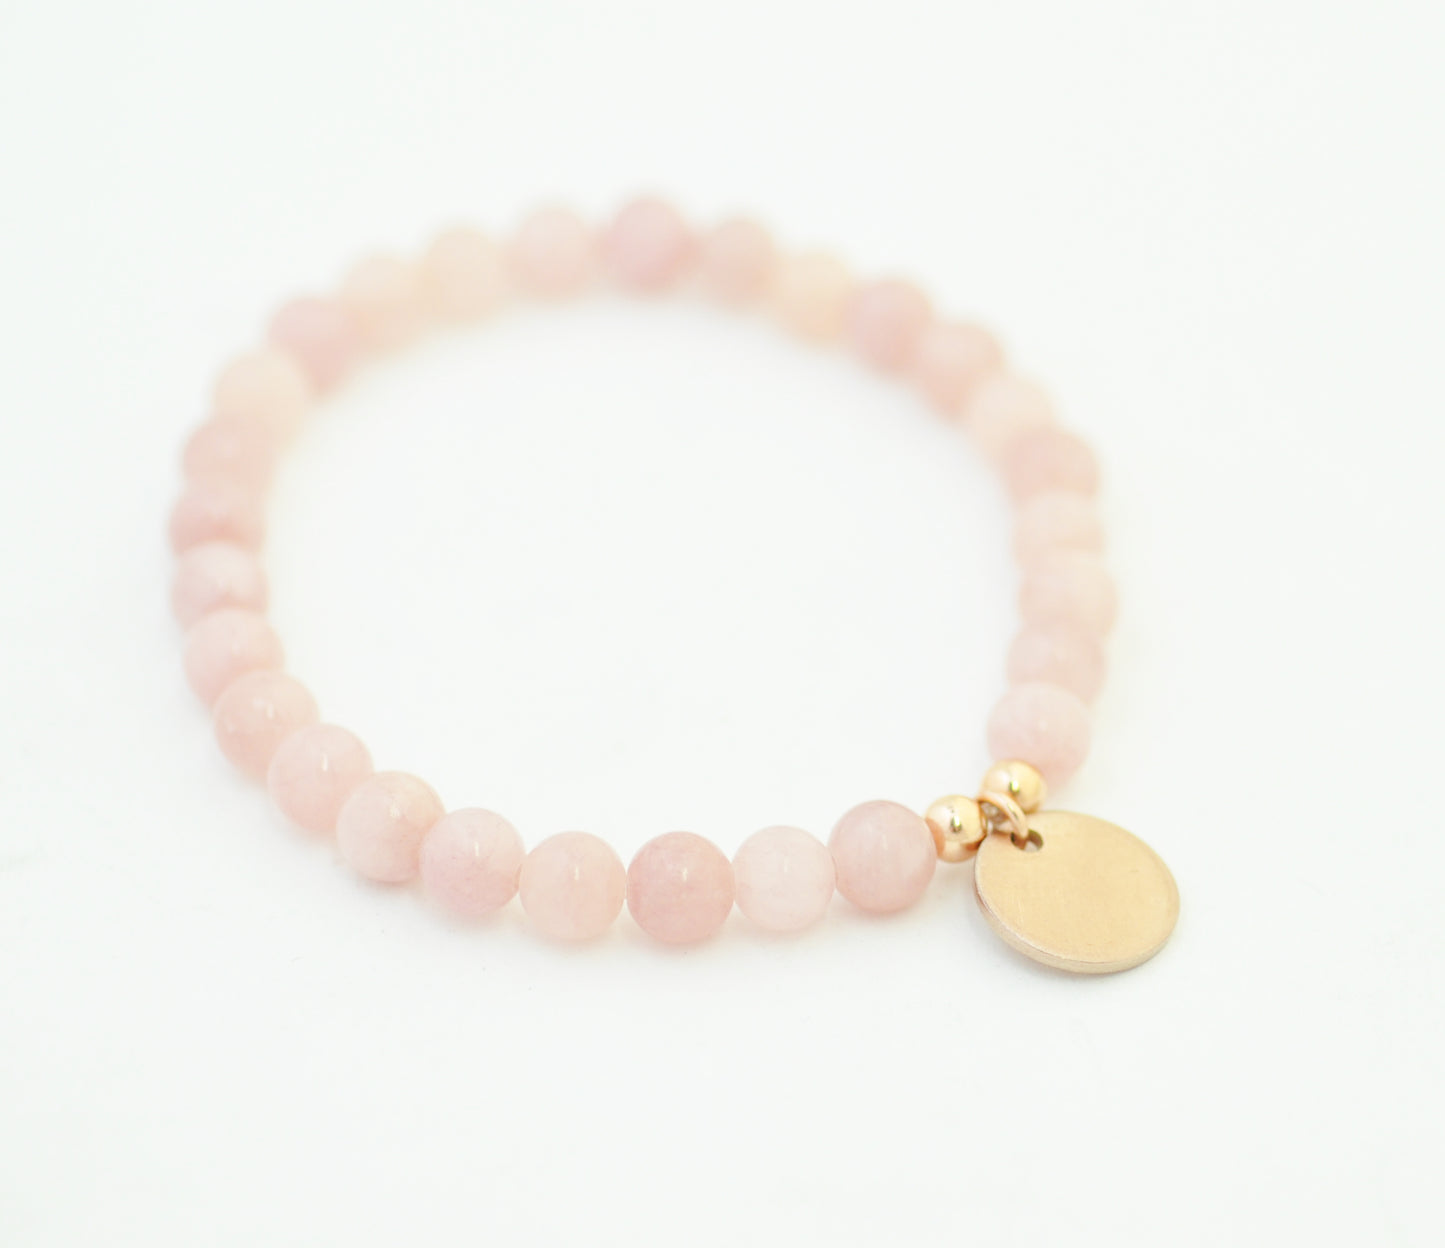 Personalized dusky pink jade bracelet with engraving - rosé